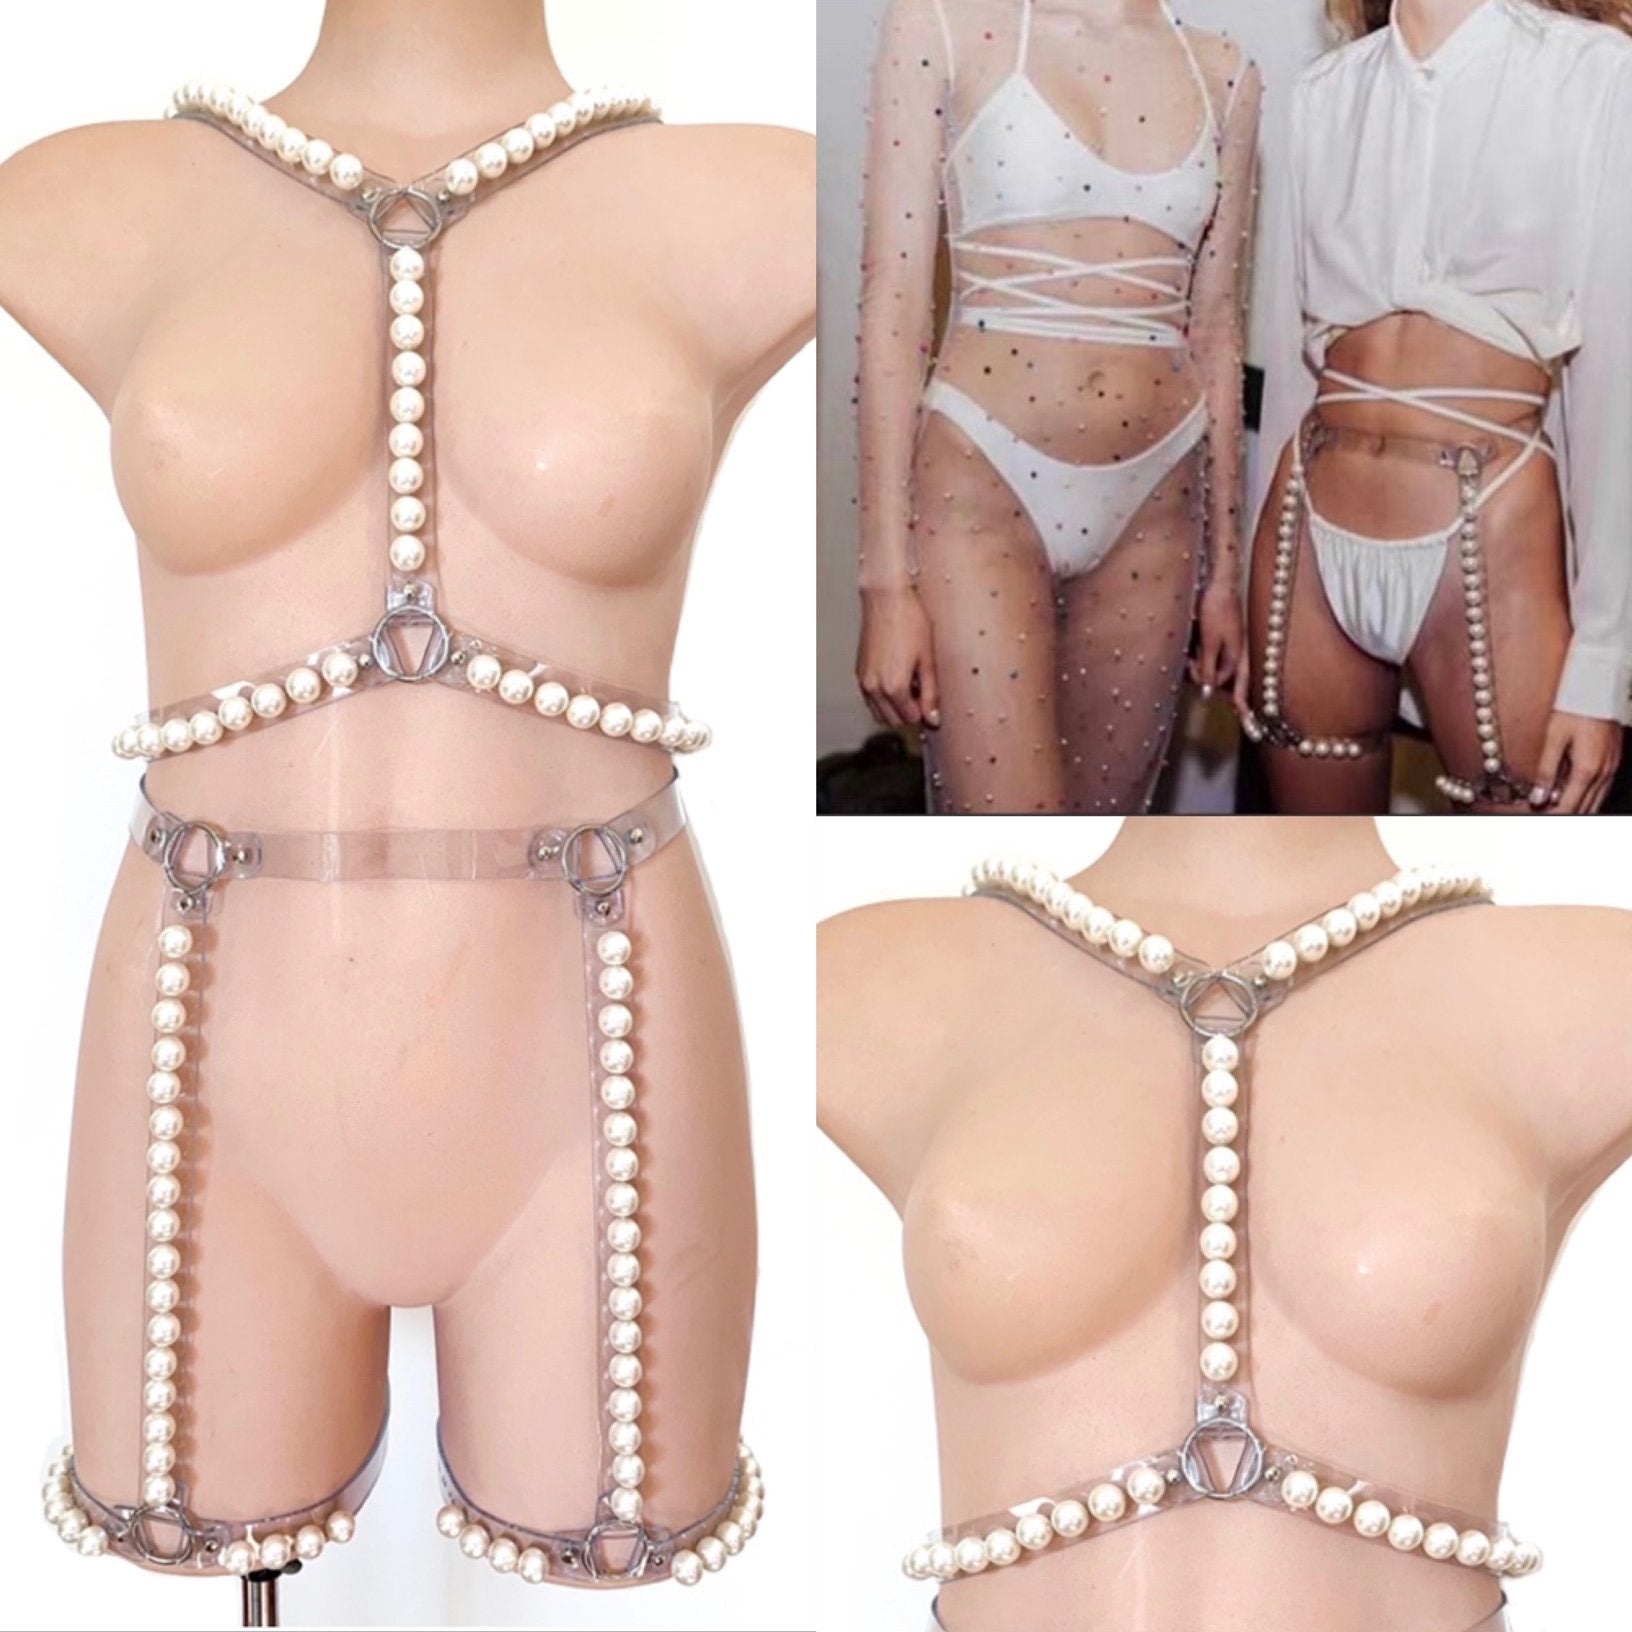 Pearl Body Harness, karla spetic pearl harness